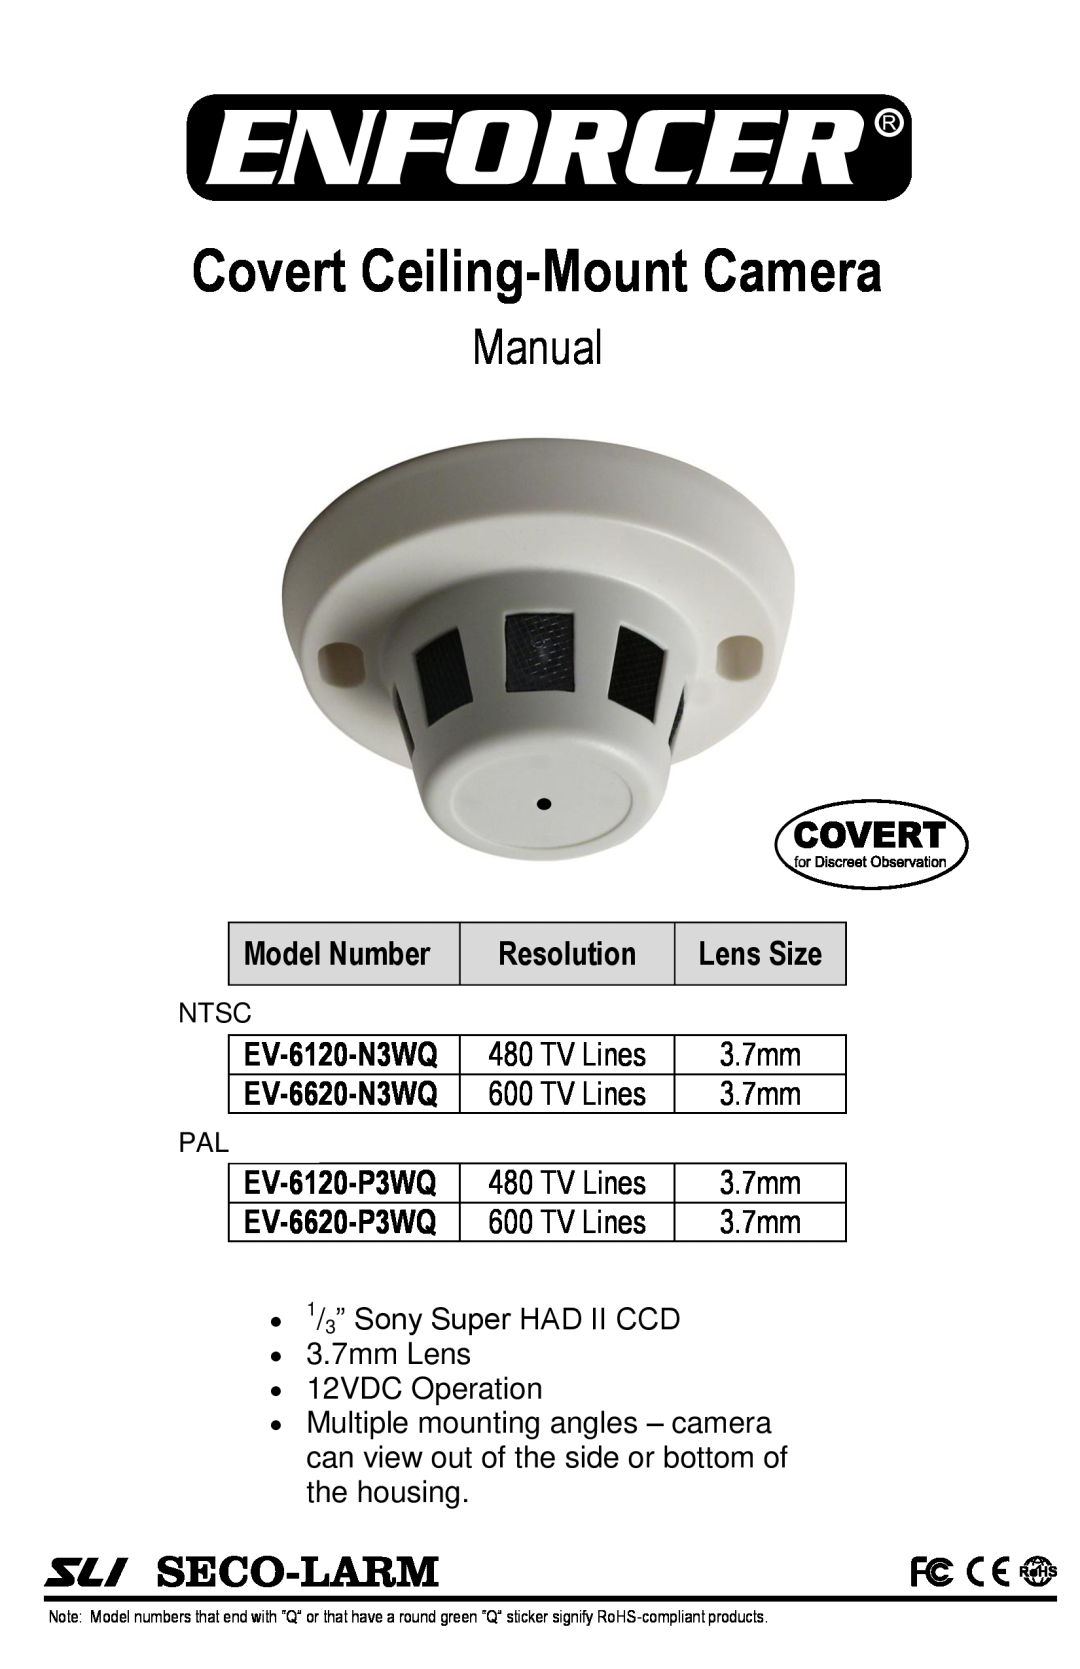 SECO-LARM USA EV-6620-N3WQ manual Model Number, Resolution Lens Size, Ntsc, Covert Ceiling-Mount Camera, Manual, 3.7mm 